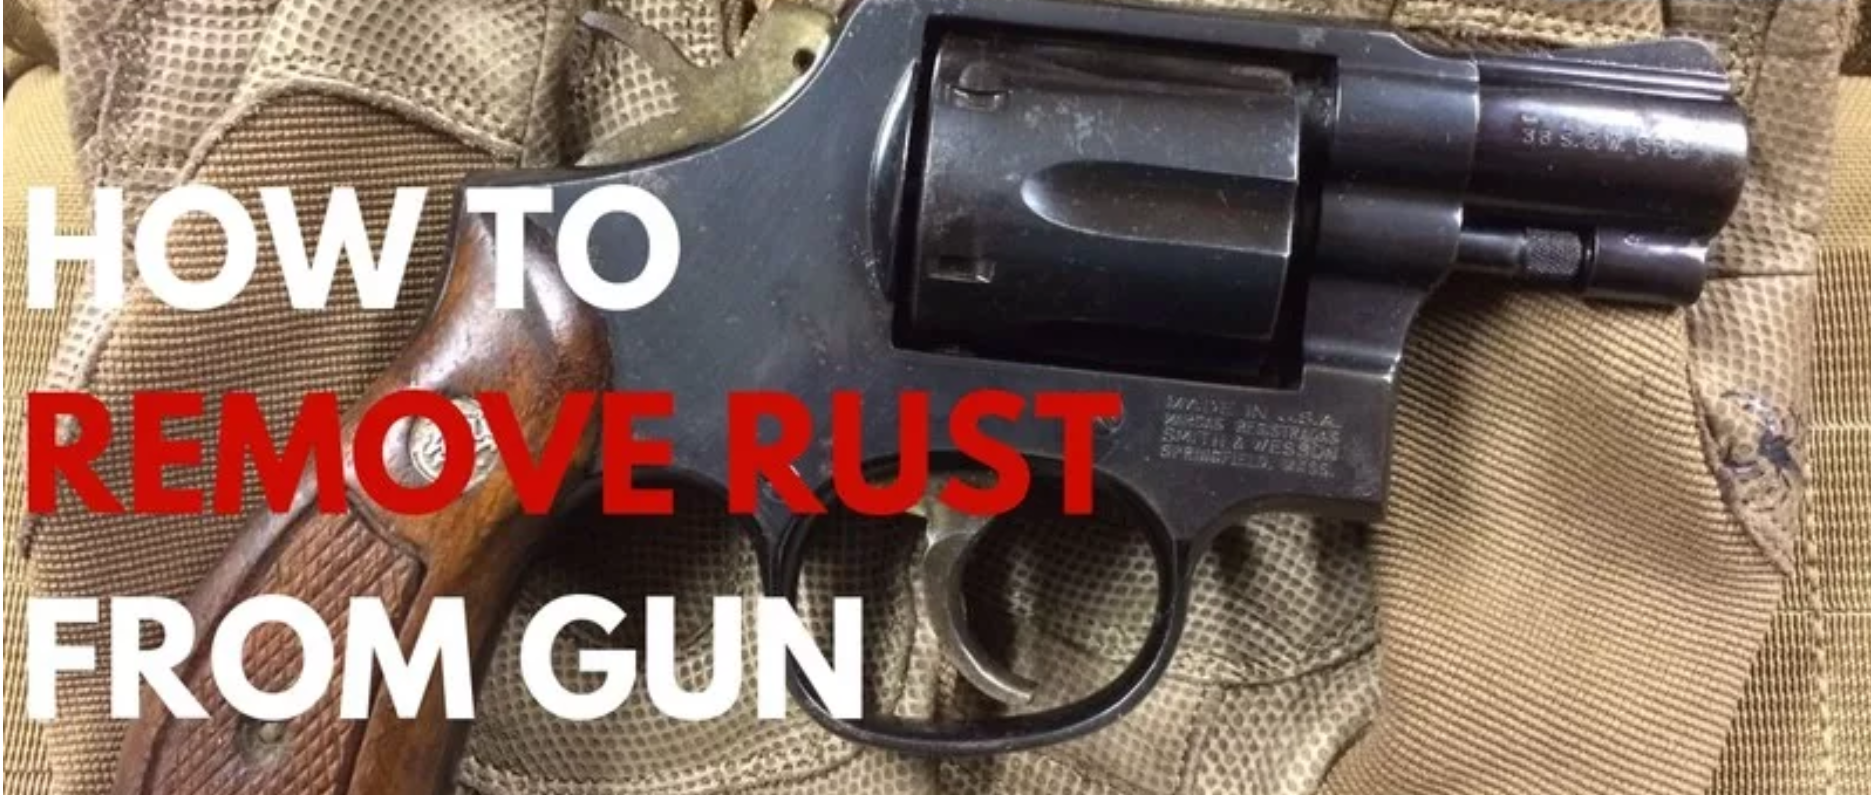 5 methods to remove rust from gun - makerslegacy.com